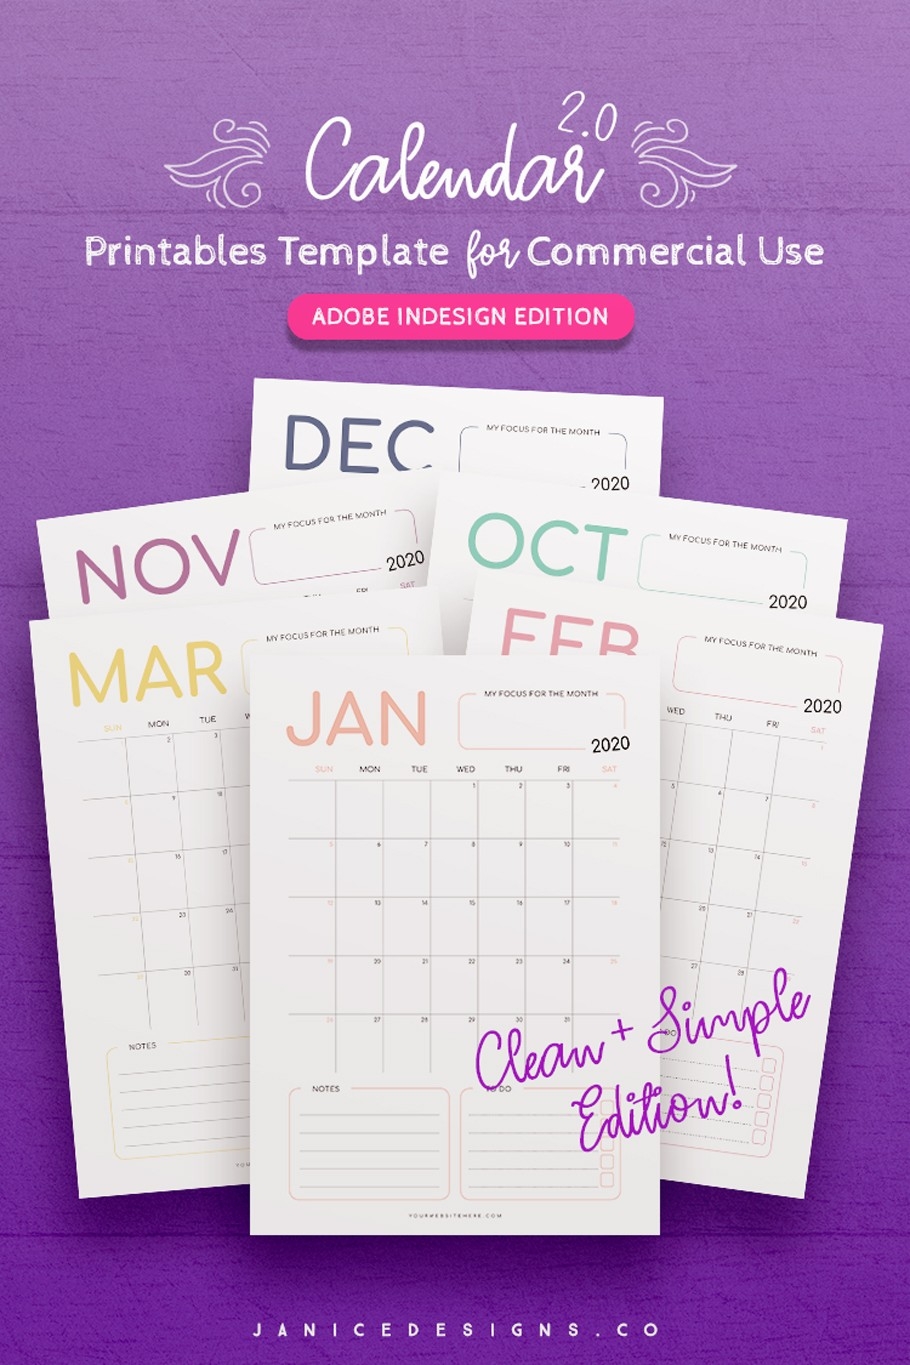 Adobe Indesign Calendar Template 2020 | Calendar Template Printable